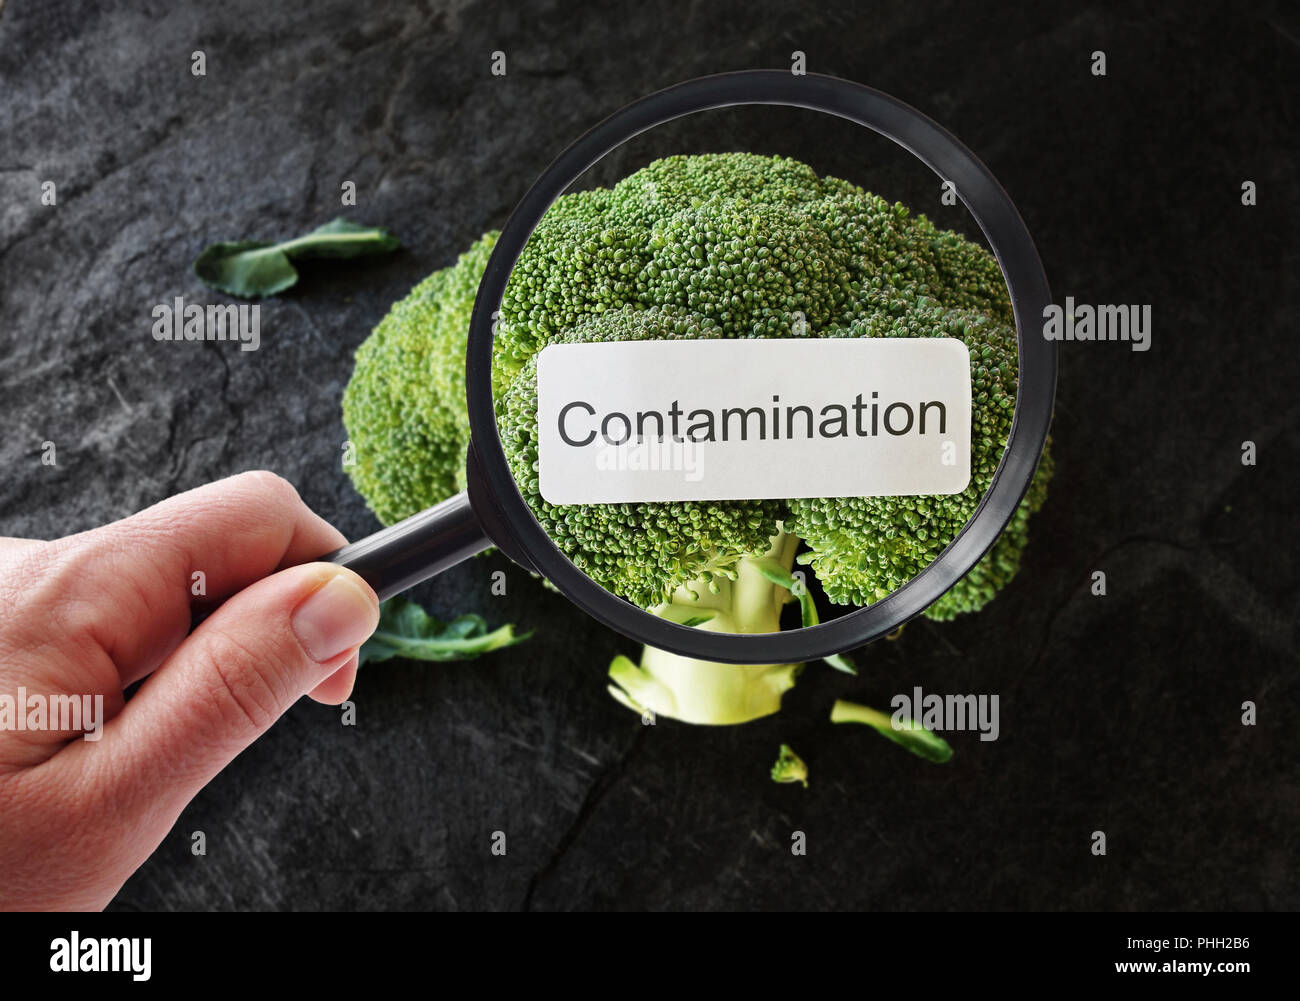 Detecting food contamination Stock Photo